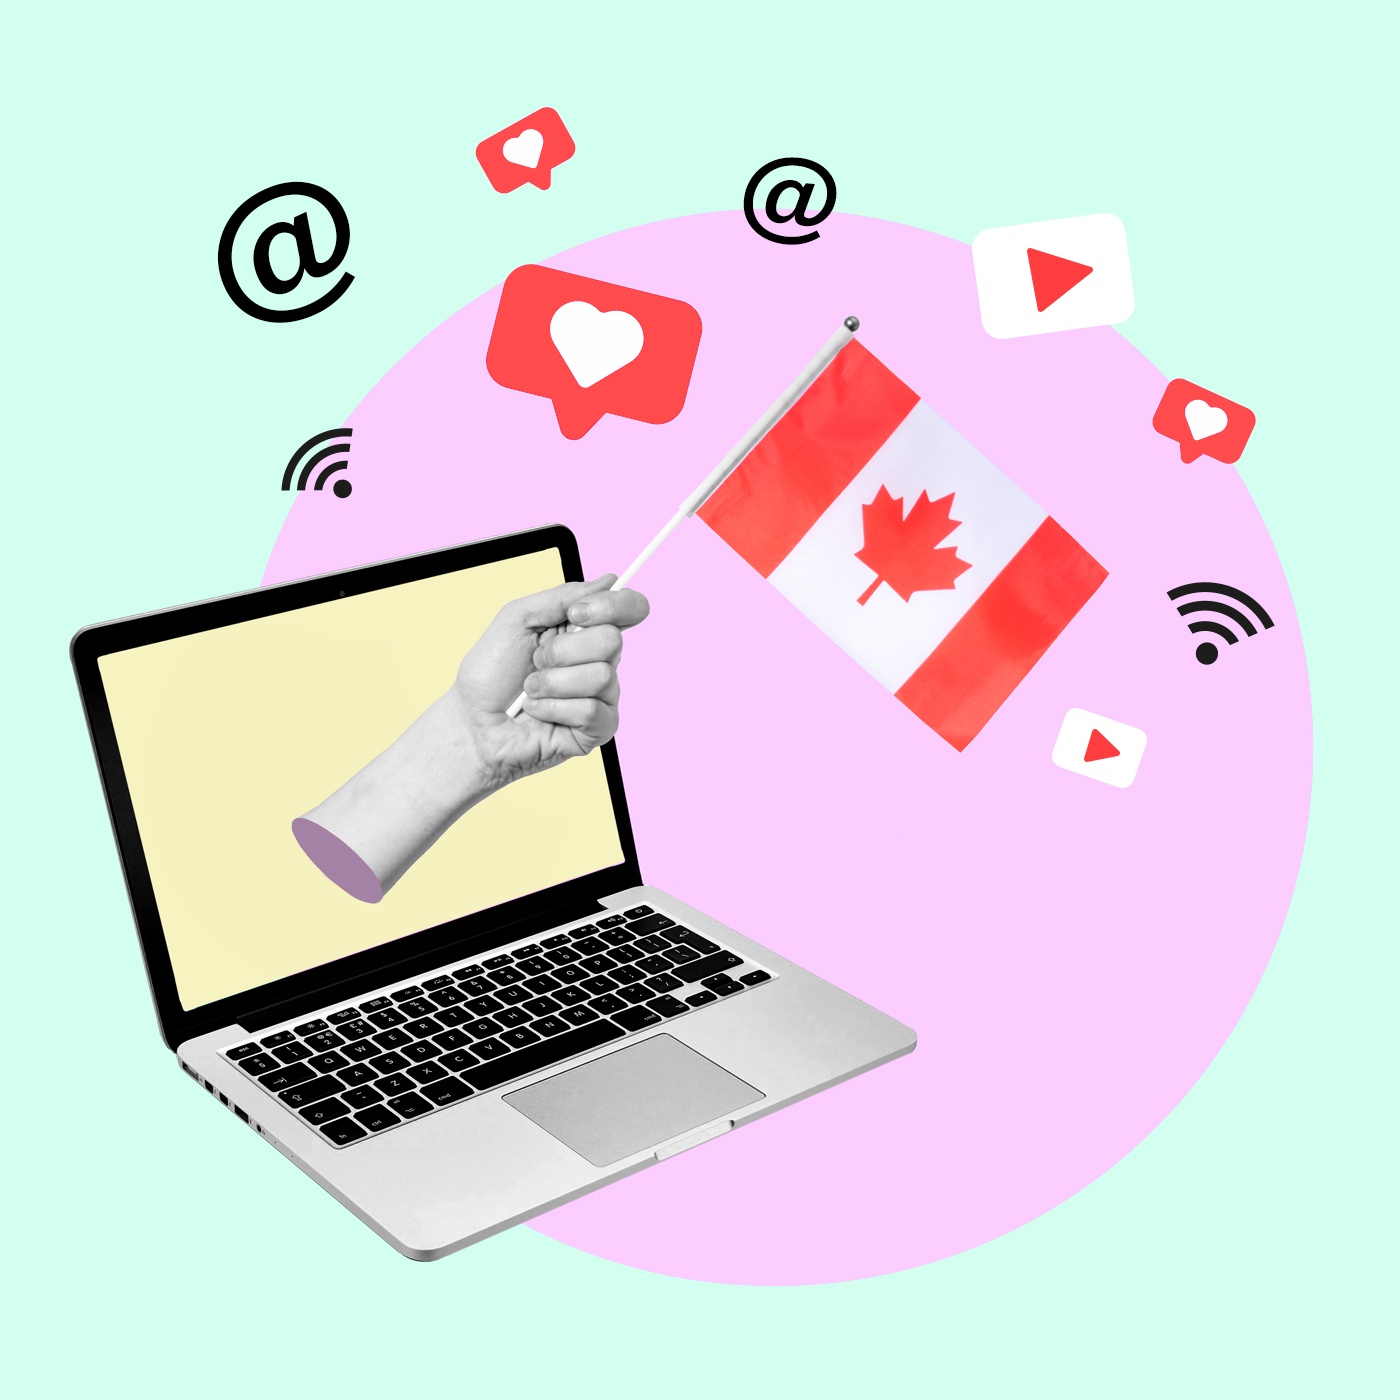 Democracy Online: The Canadian Debate on Digital Platform Regulations